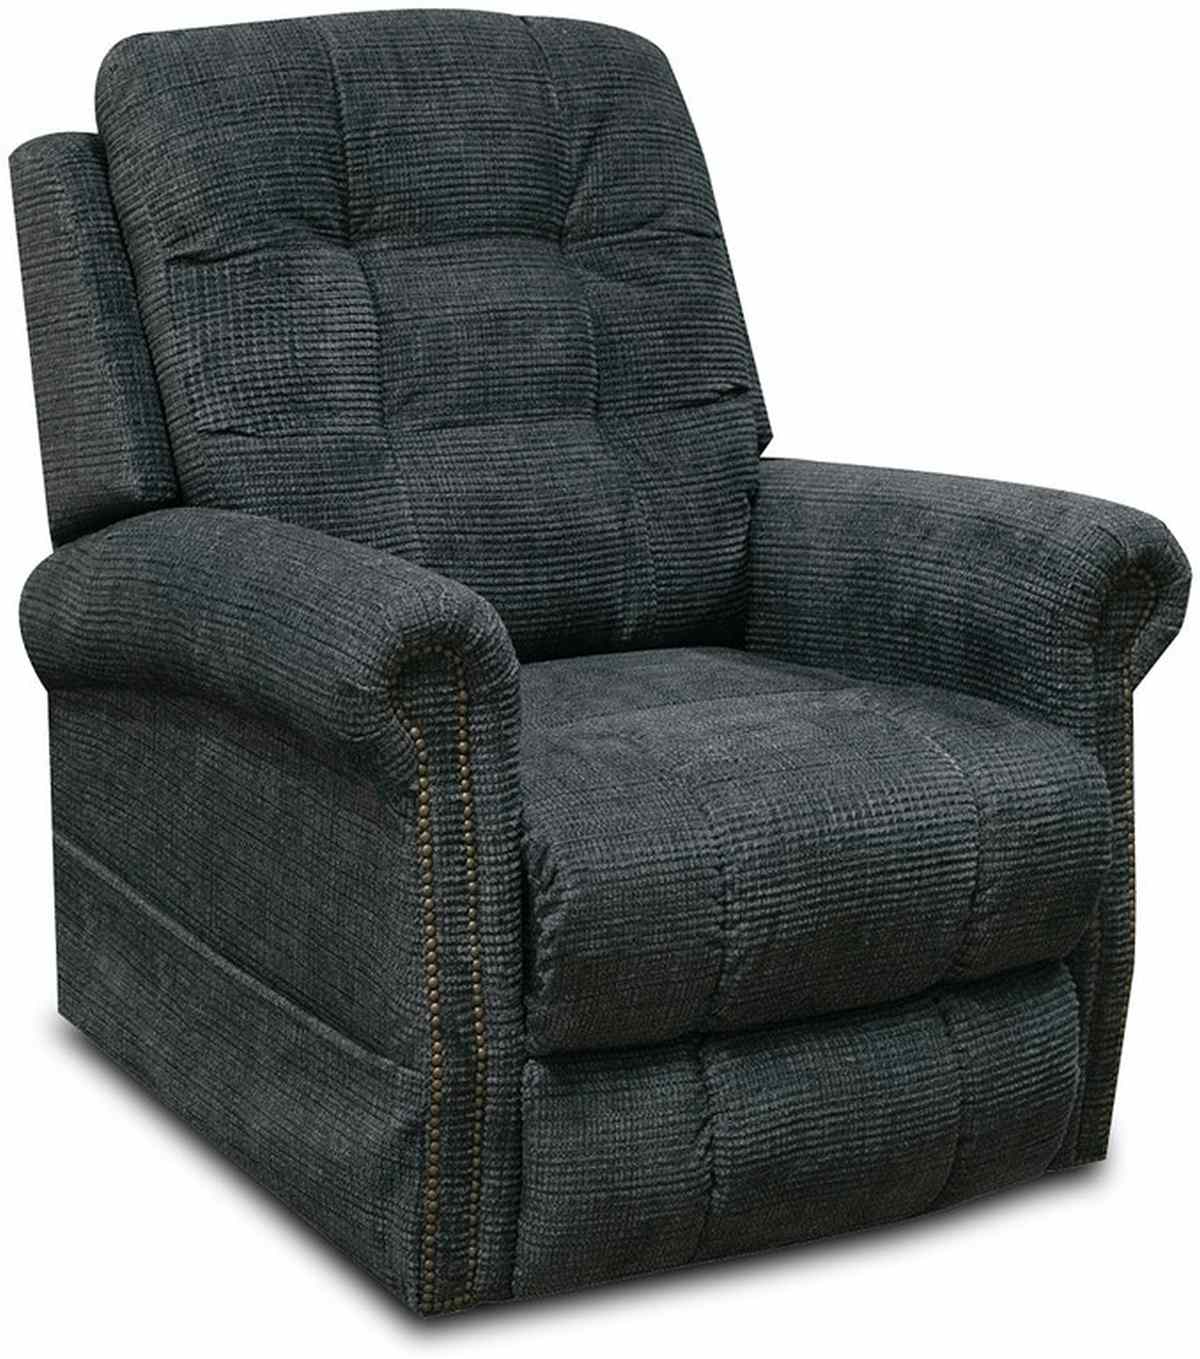 England Furniture Co EZ9P00 Reclining Lift Chair